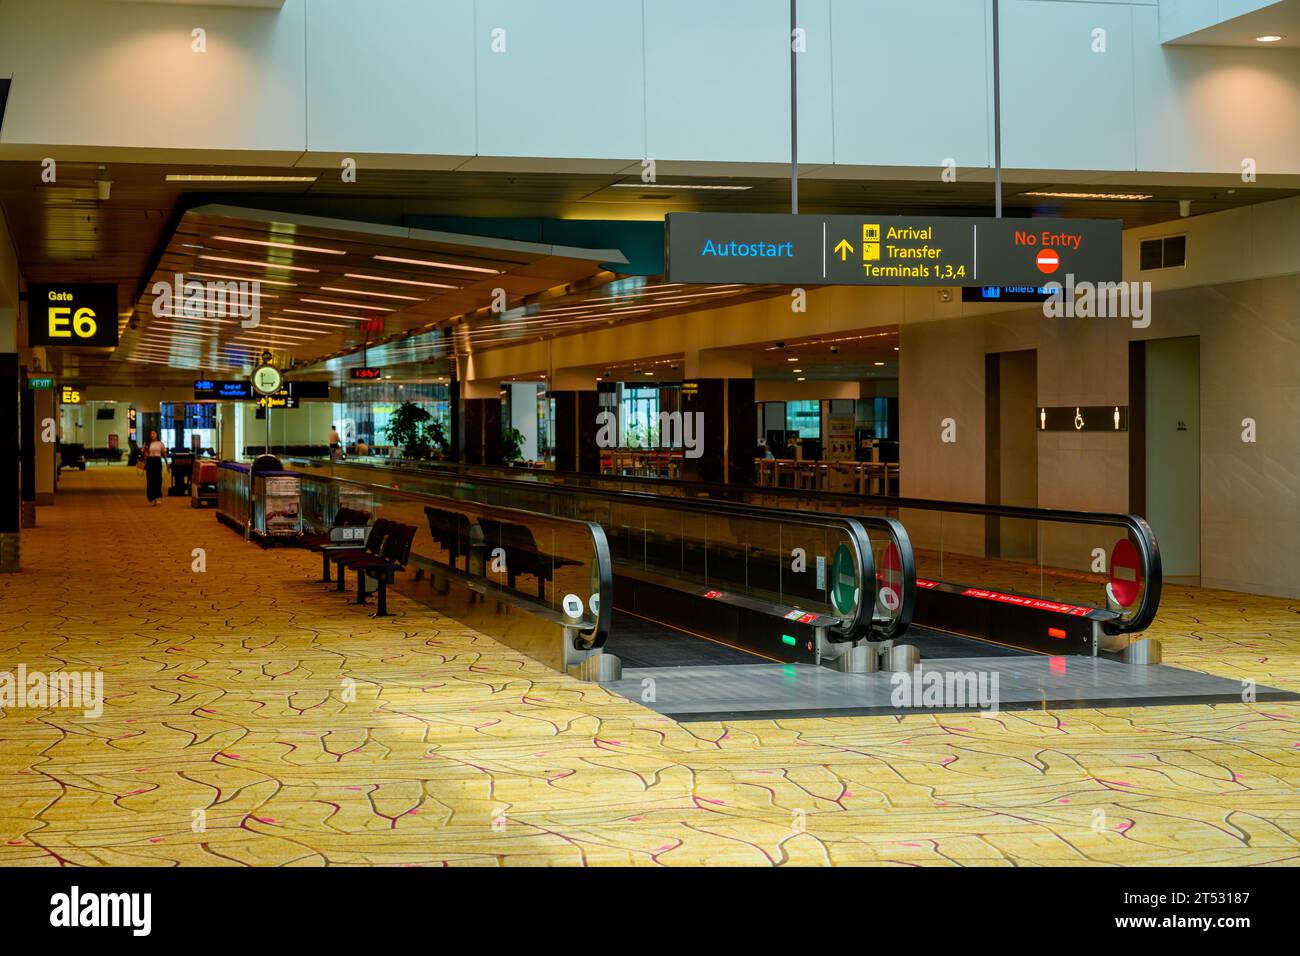 Terminal 2 at Singapore Changi Airport Stock Photo